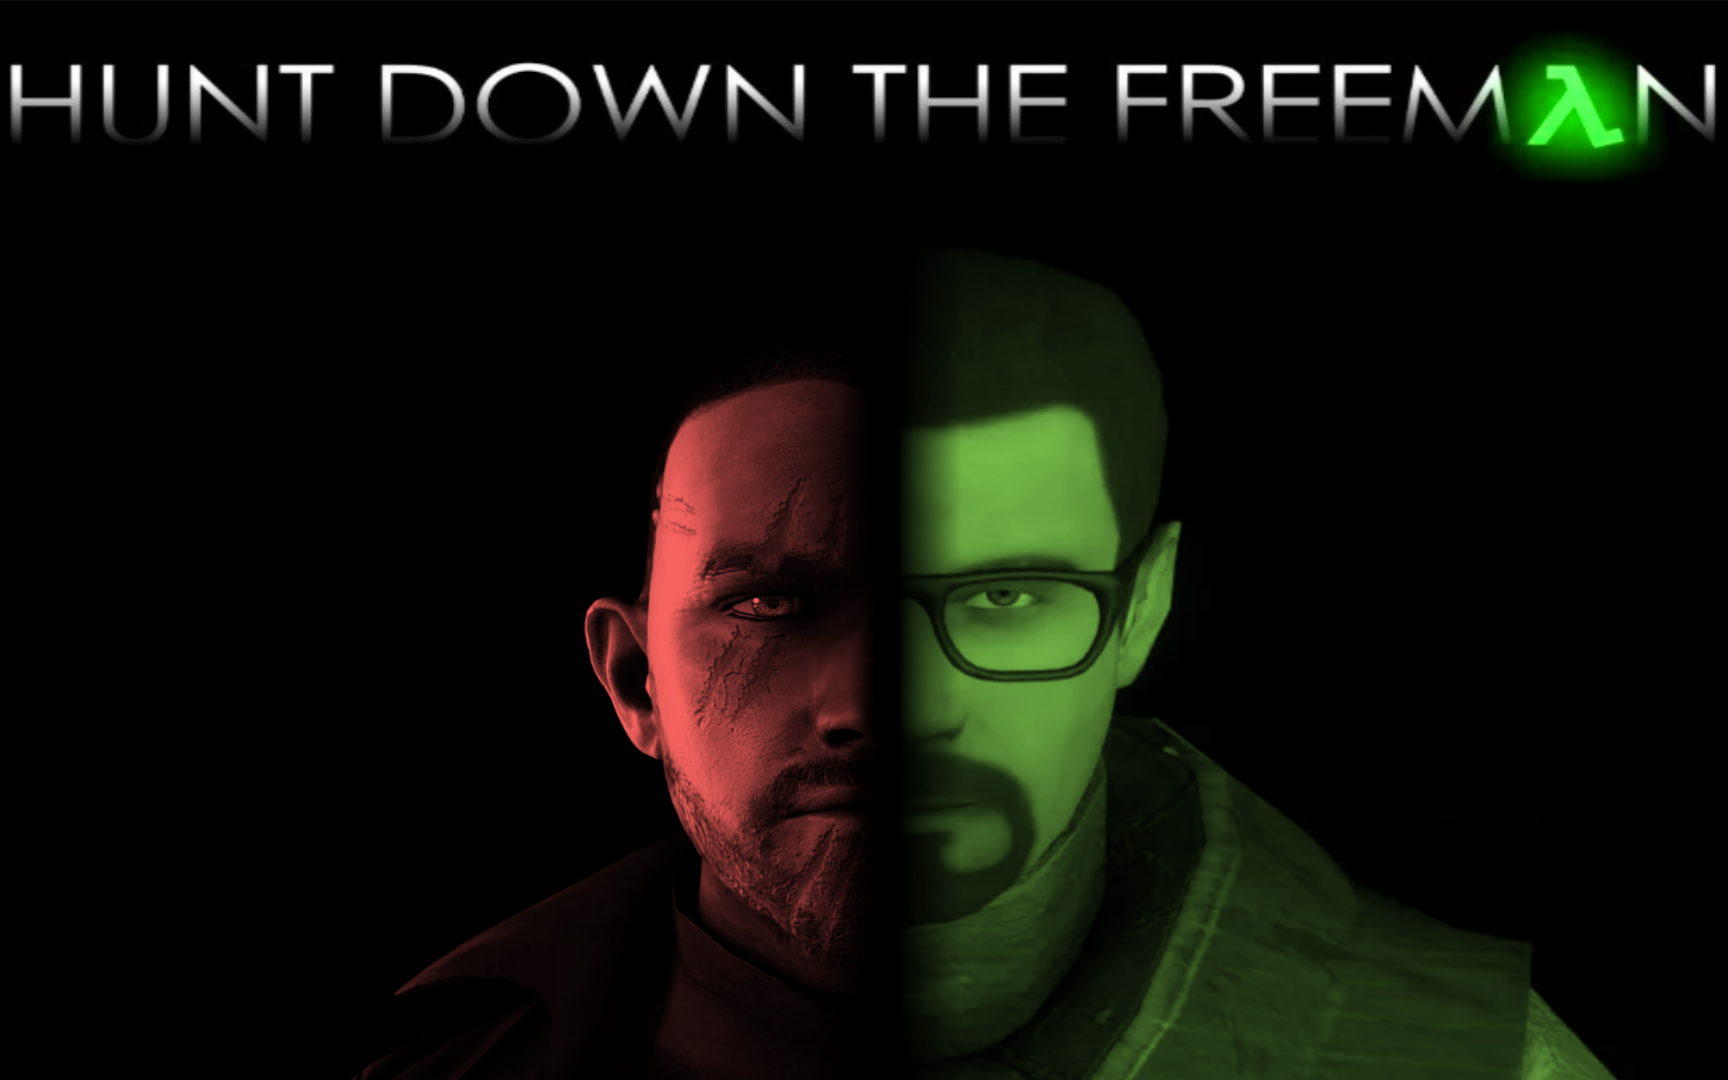 huntdown the freeman 4chan